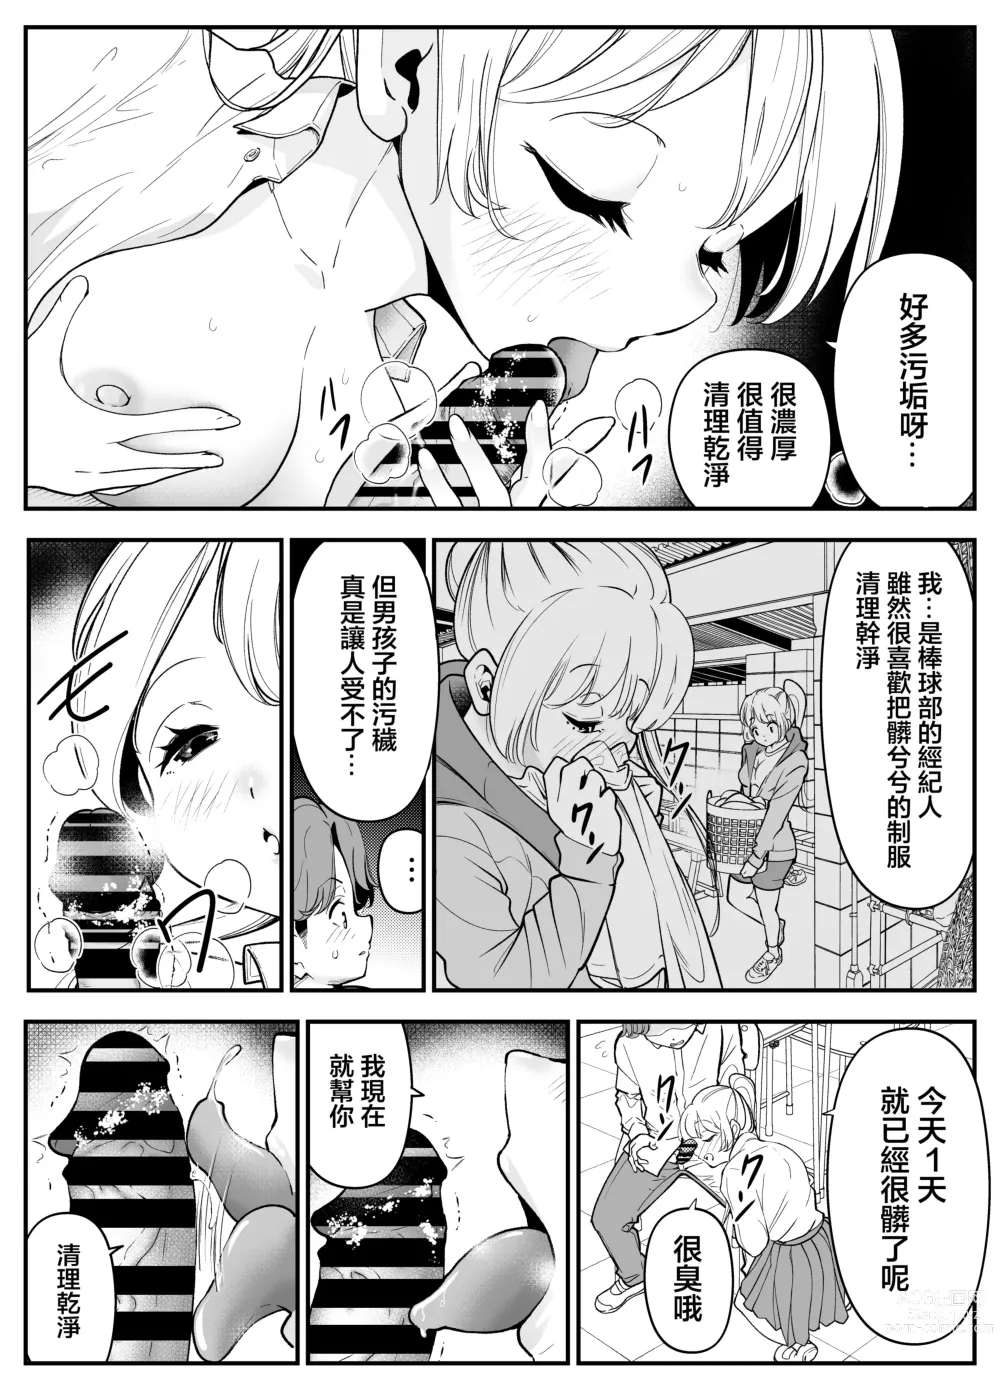 Page 6 of doujinshi 反正結婚之後大家都會SEX要不要和同學一起練習一下?